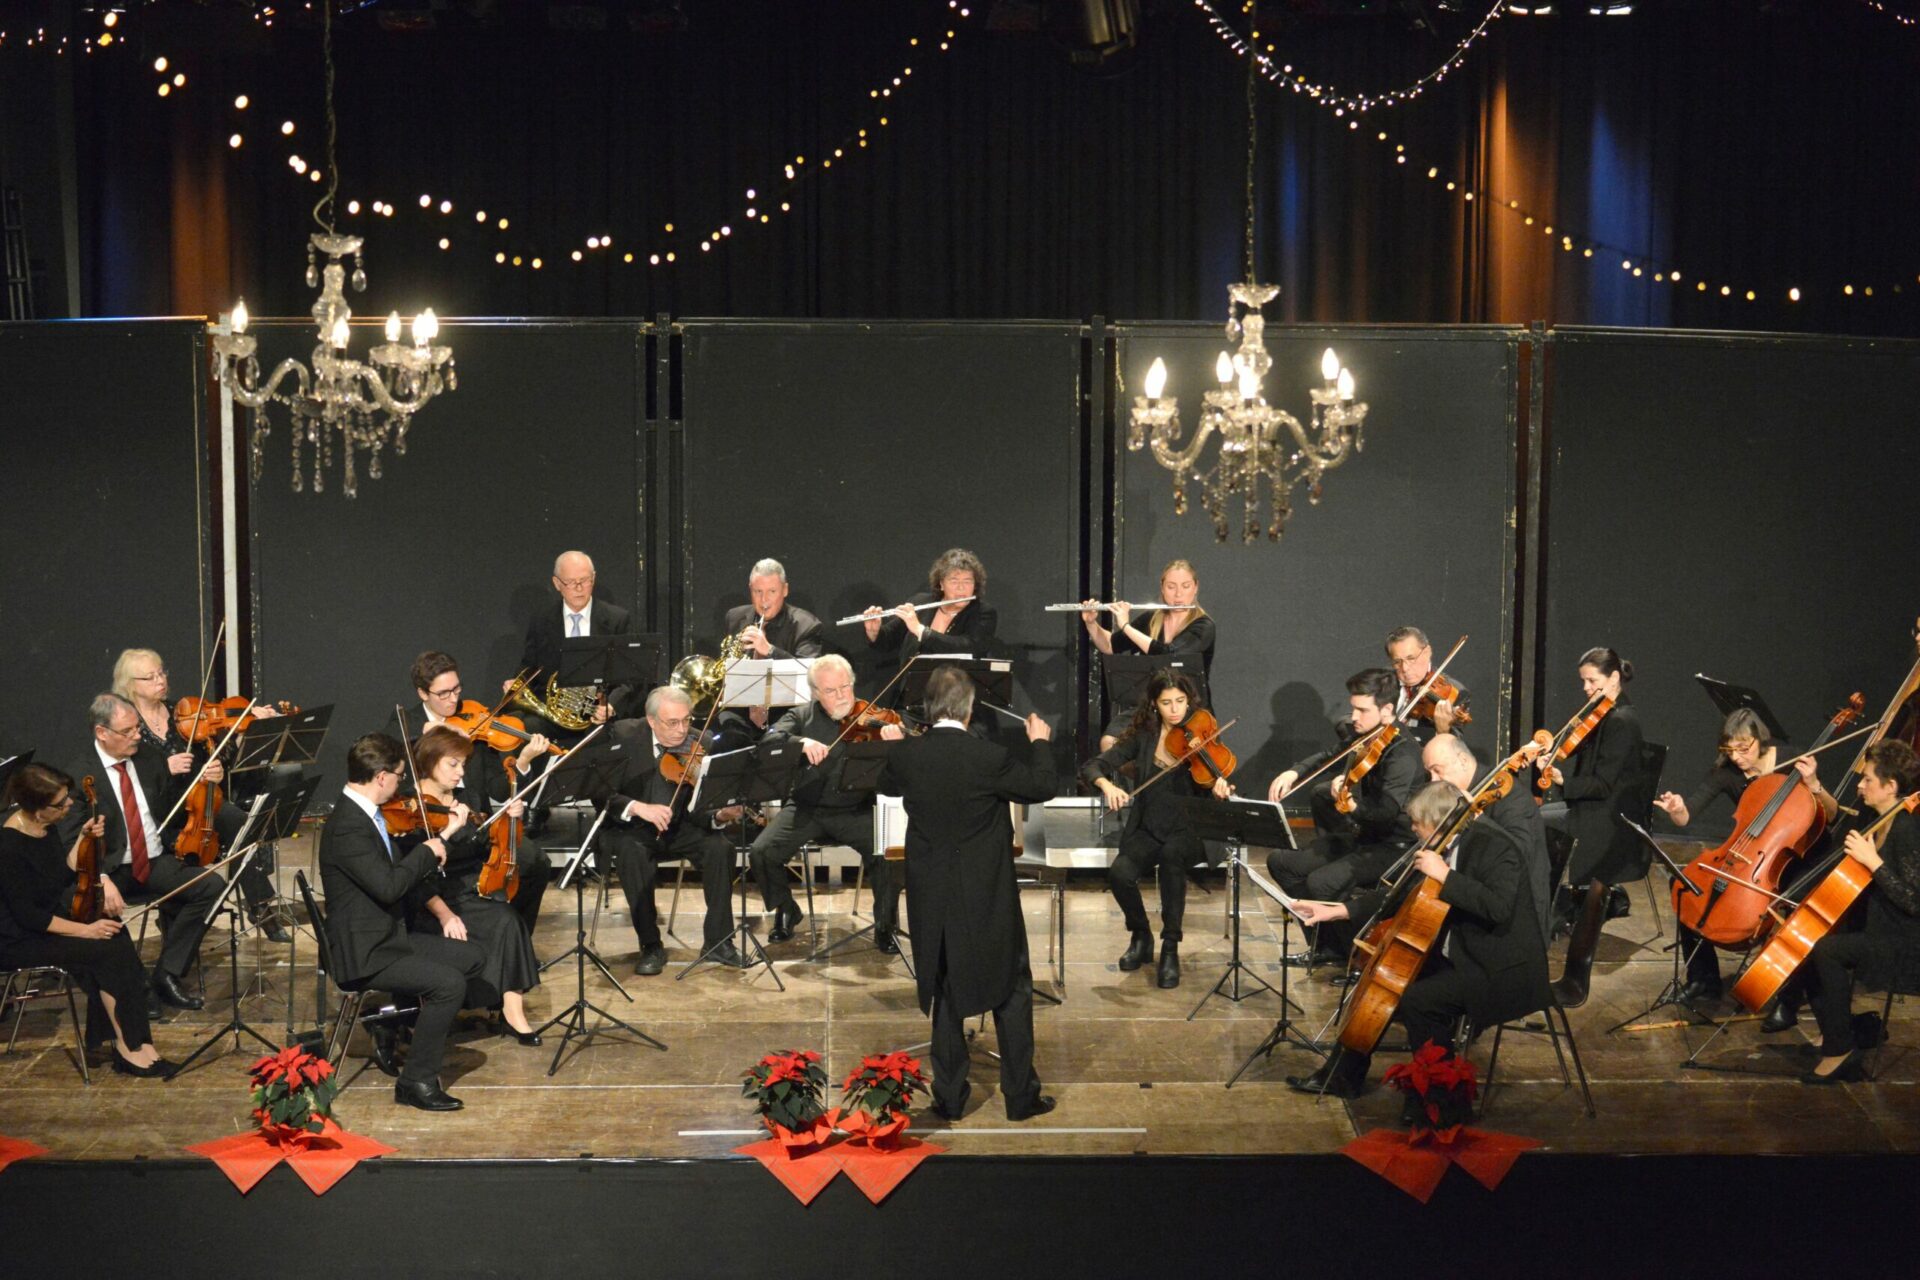 30 Jahre Ruhrstadt Orchester – Neujahrskonzert 2022 als Jubiläums-Eröffnungskonzert